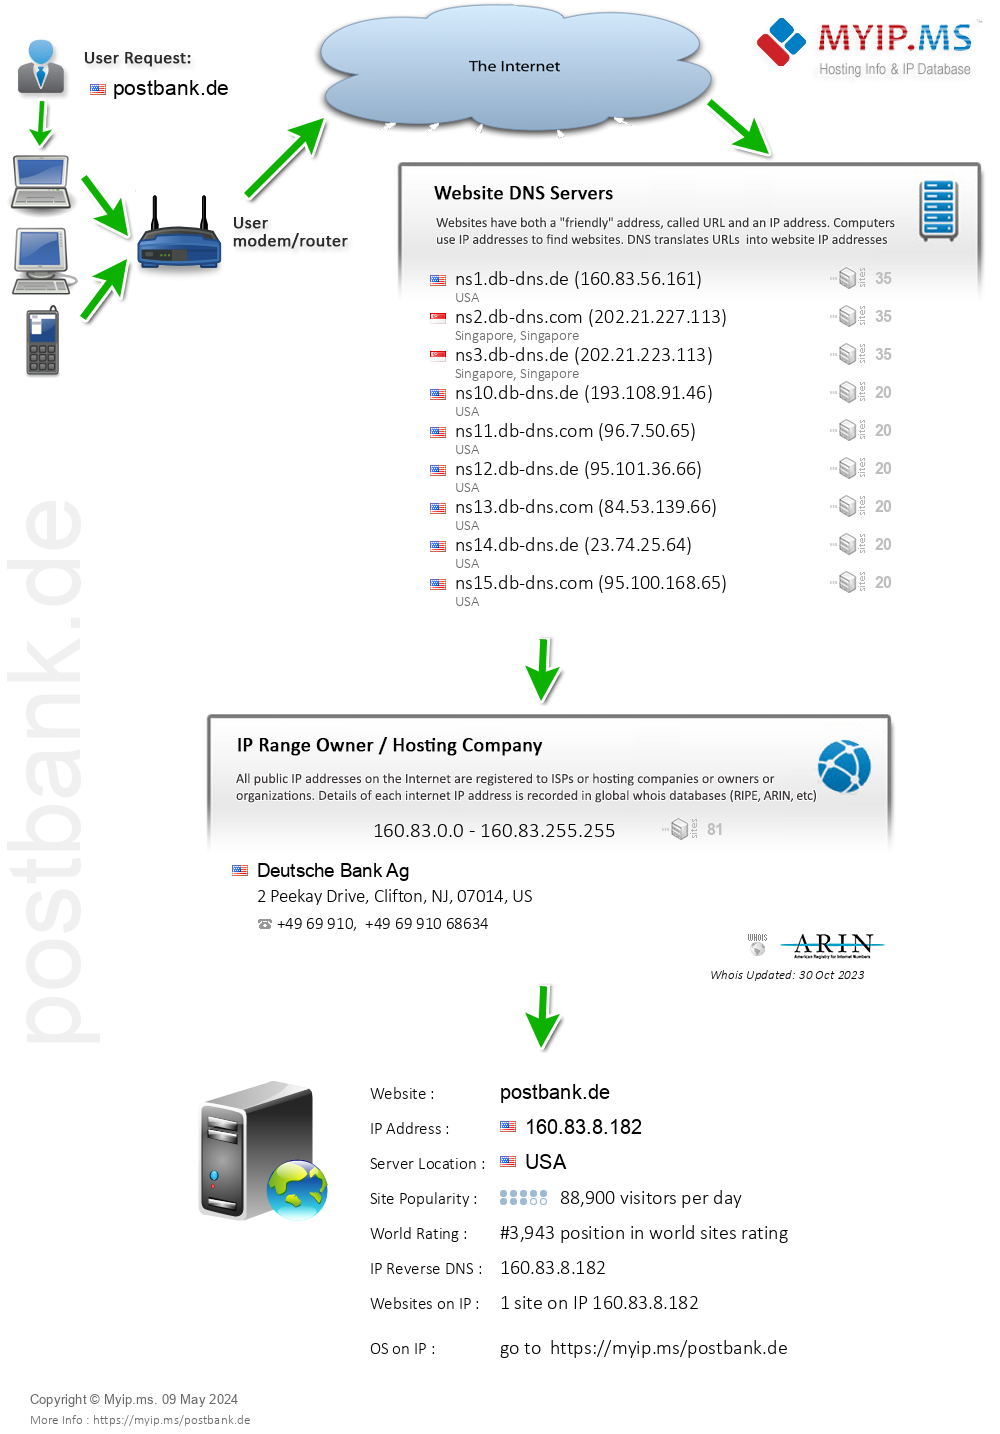 Postbank.de - Website Hosting Visual IP Diagram